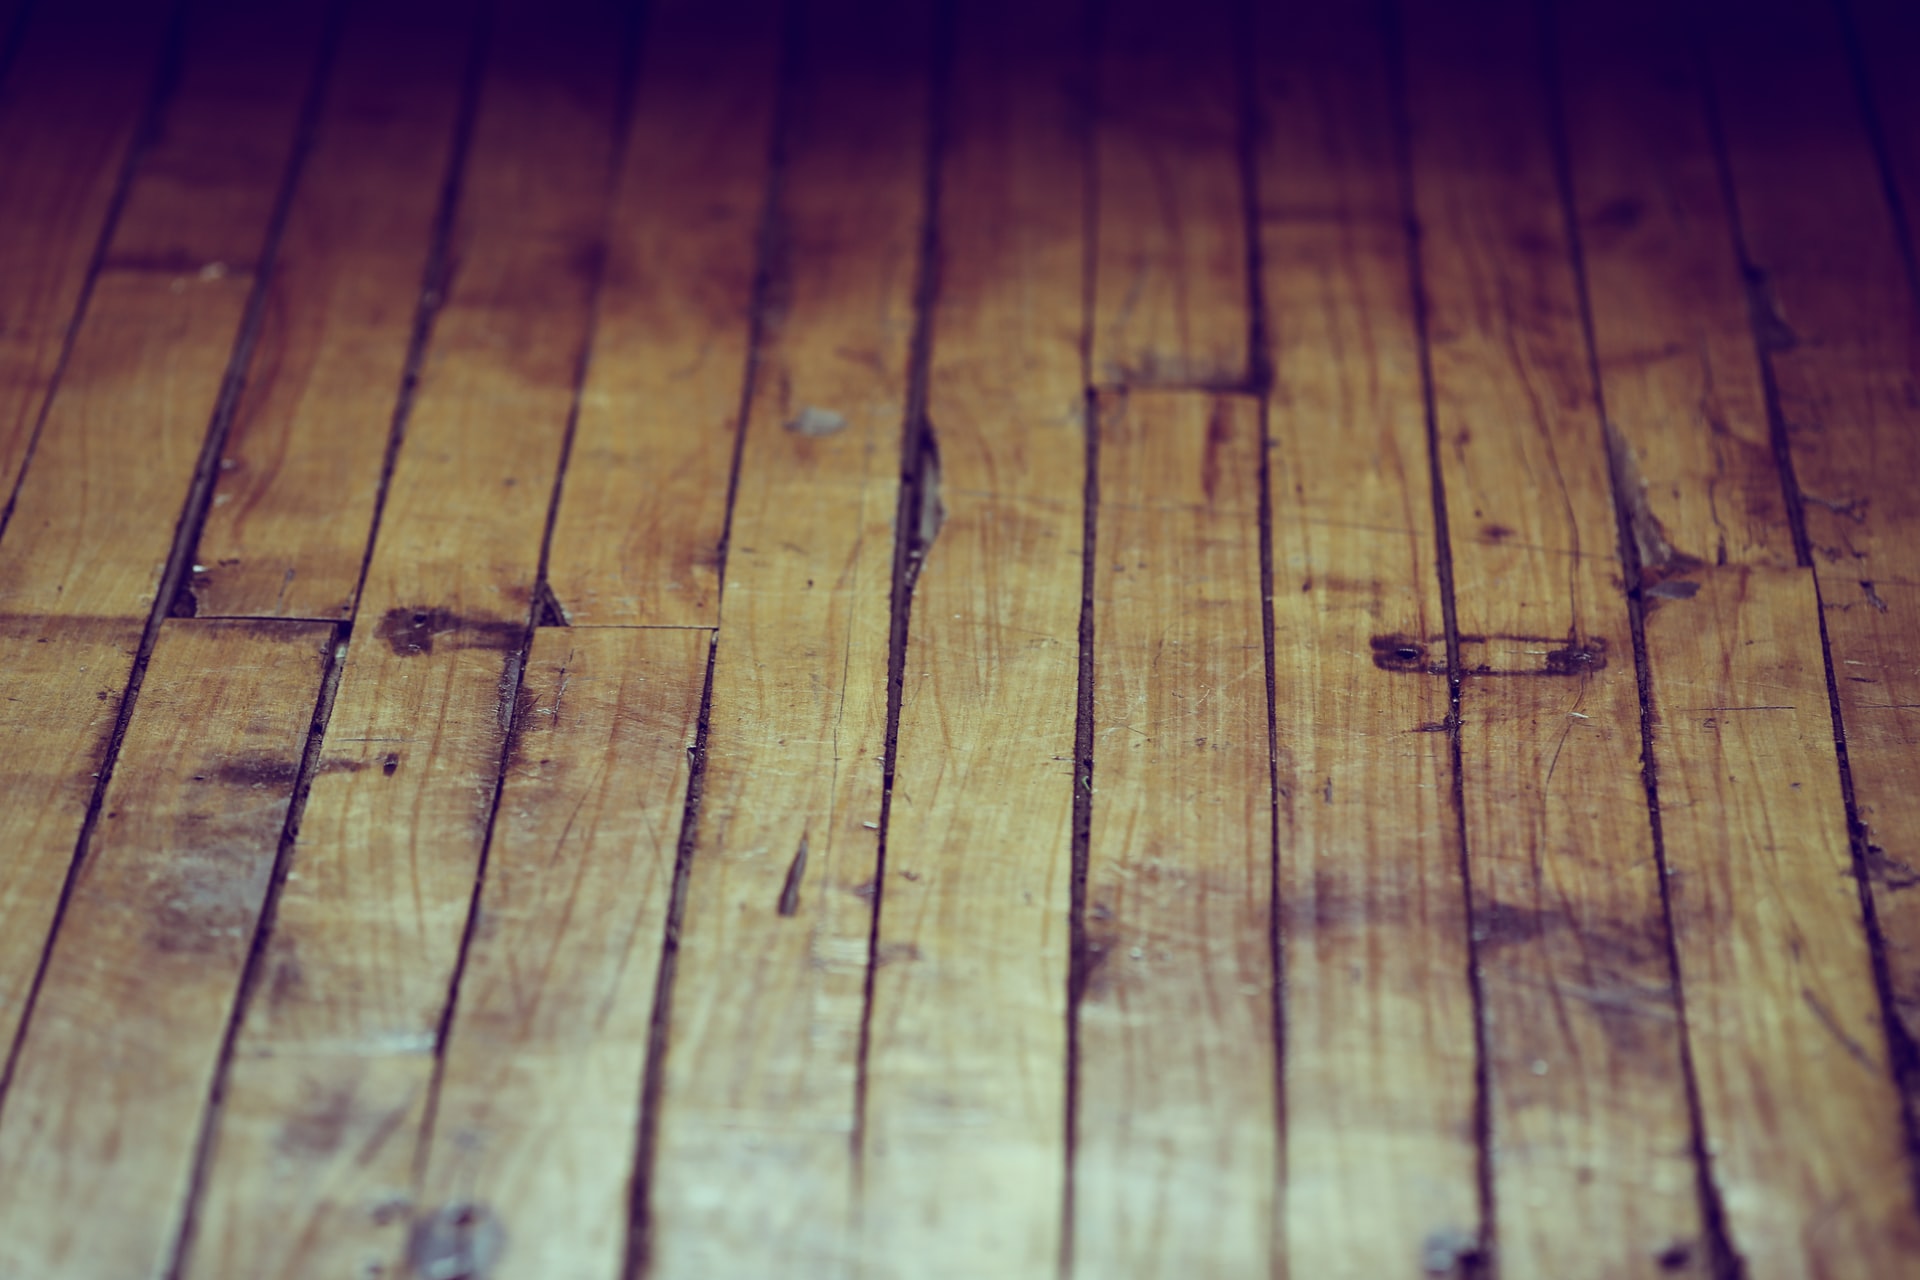 Aged hardwood floor. Photo by Francisco Galarza from Unsplash.